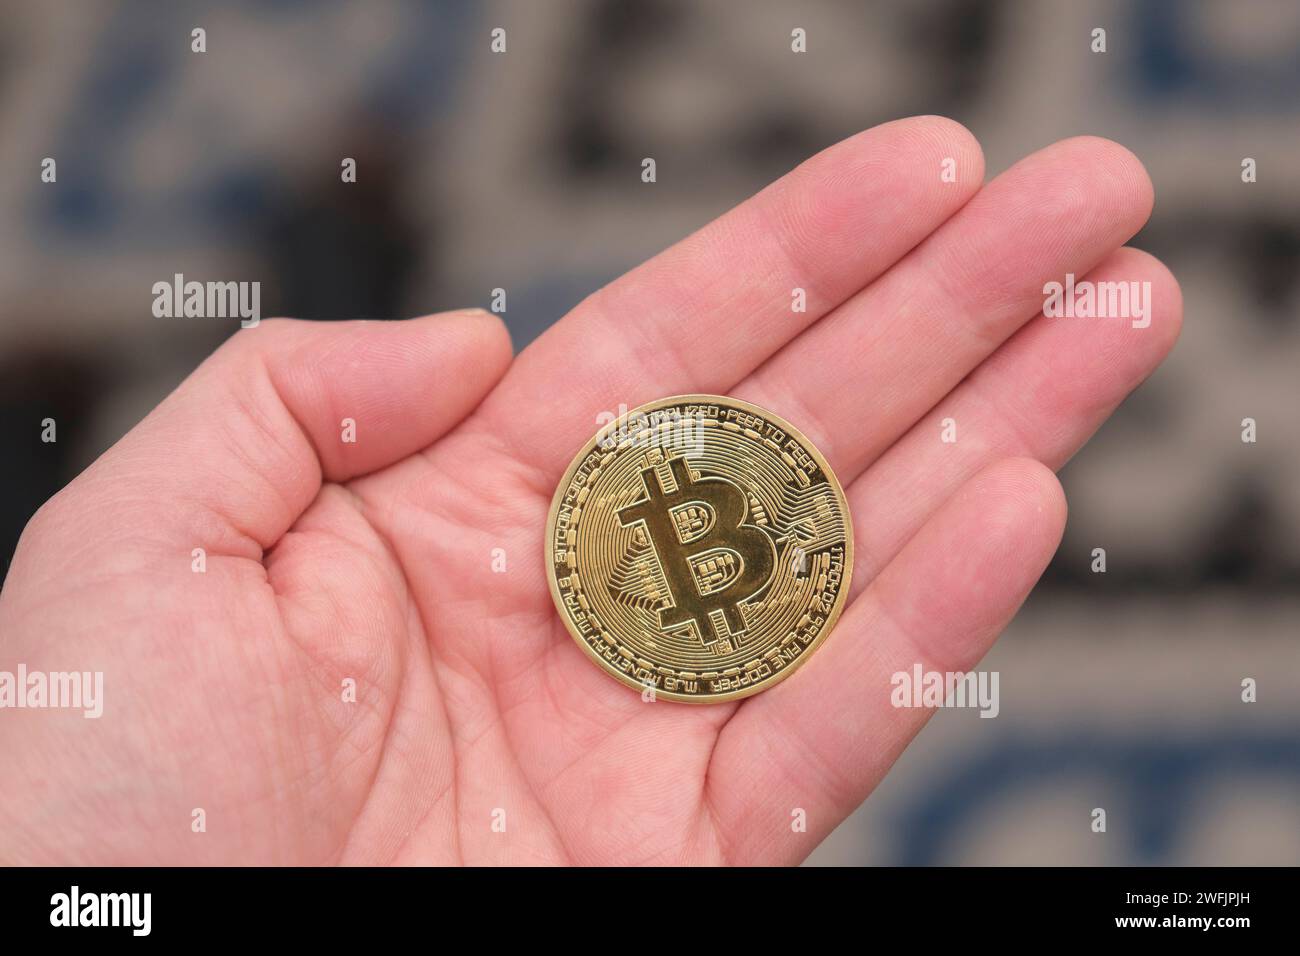 Bitcoin coin in a man's hand Stock Photo